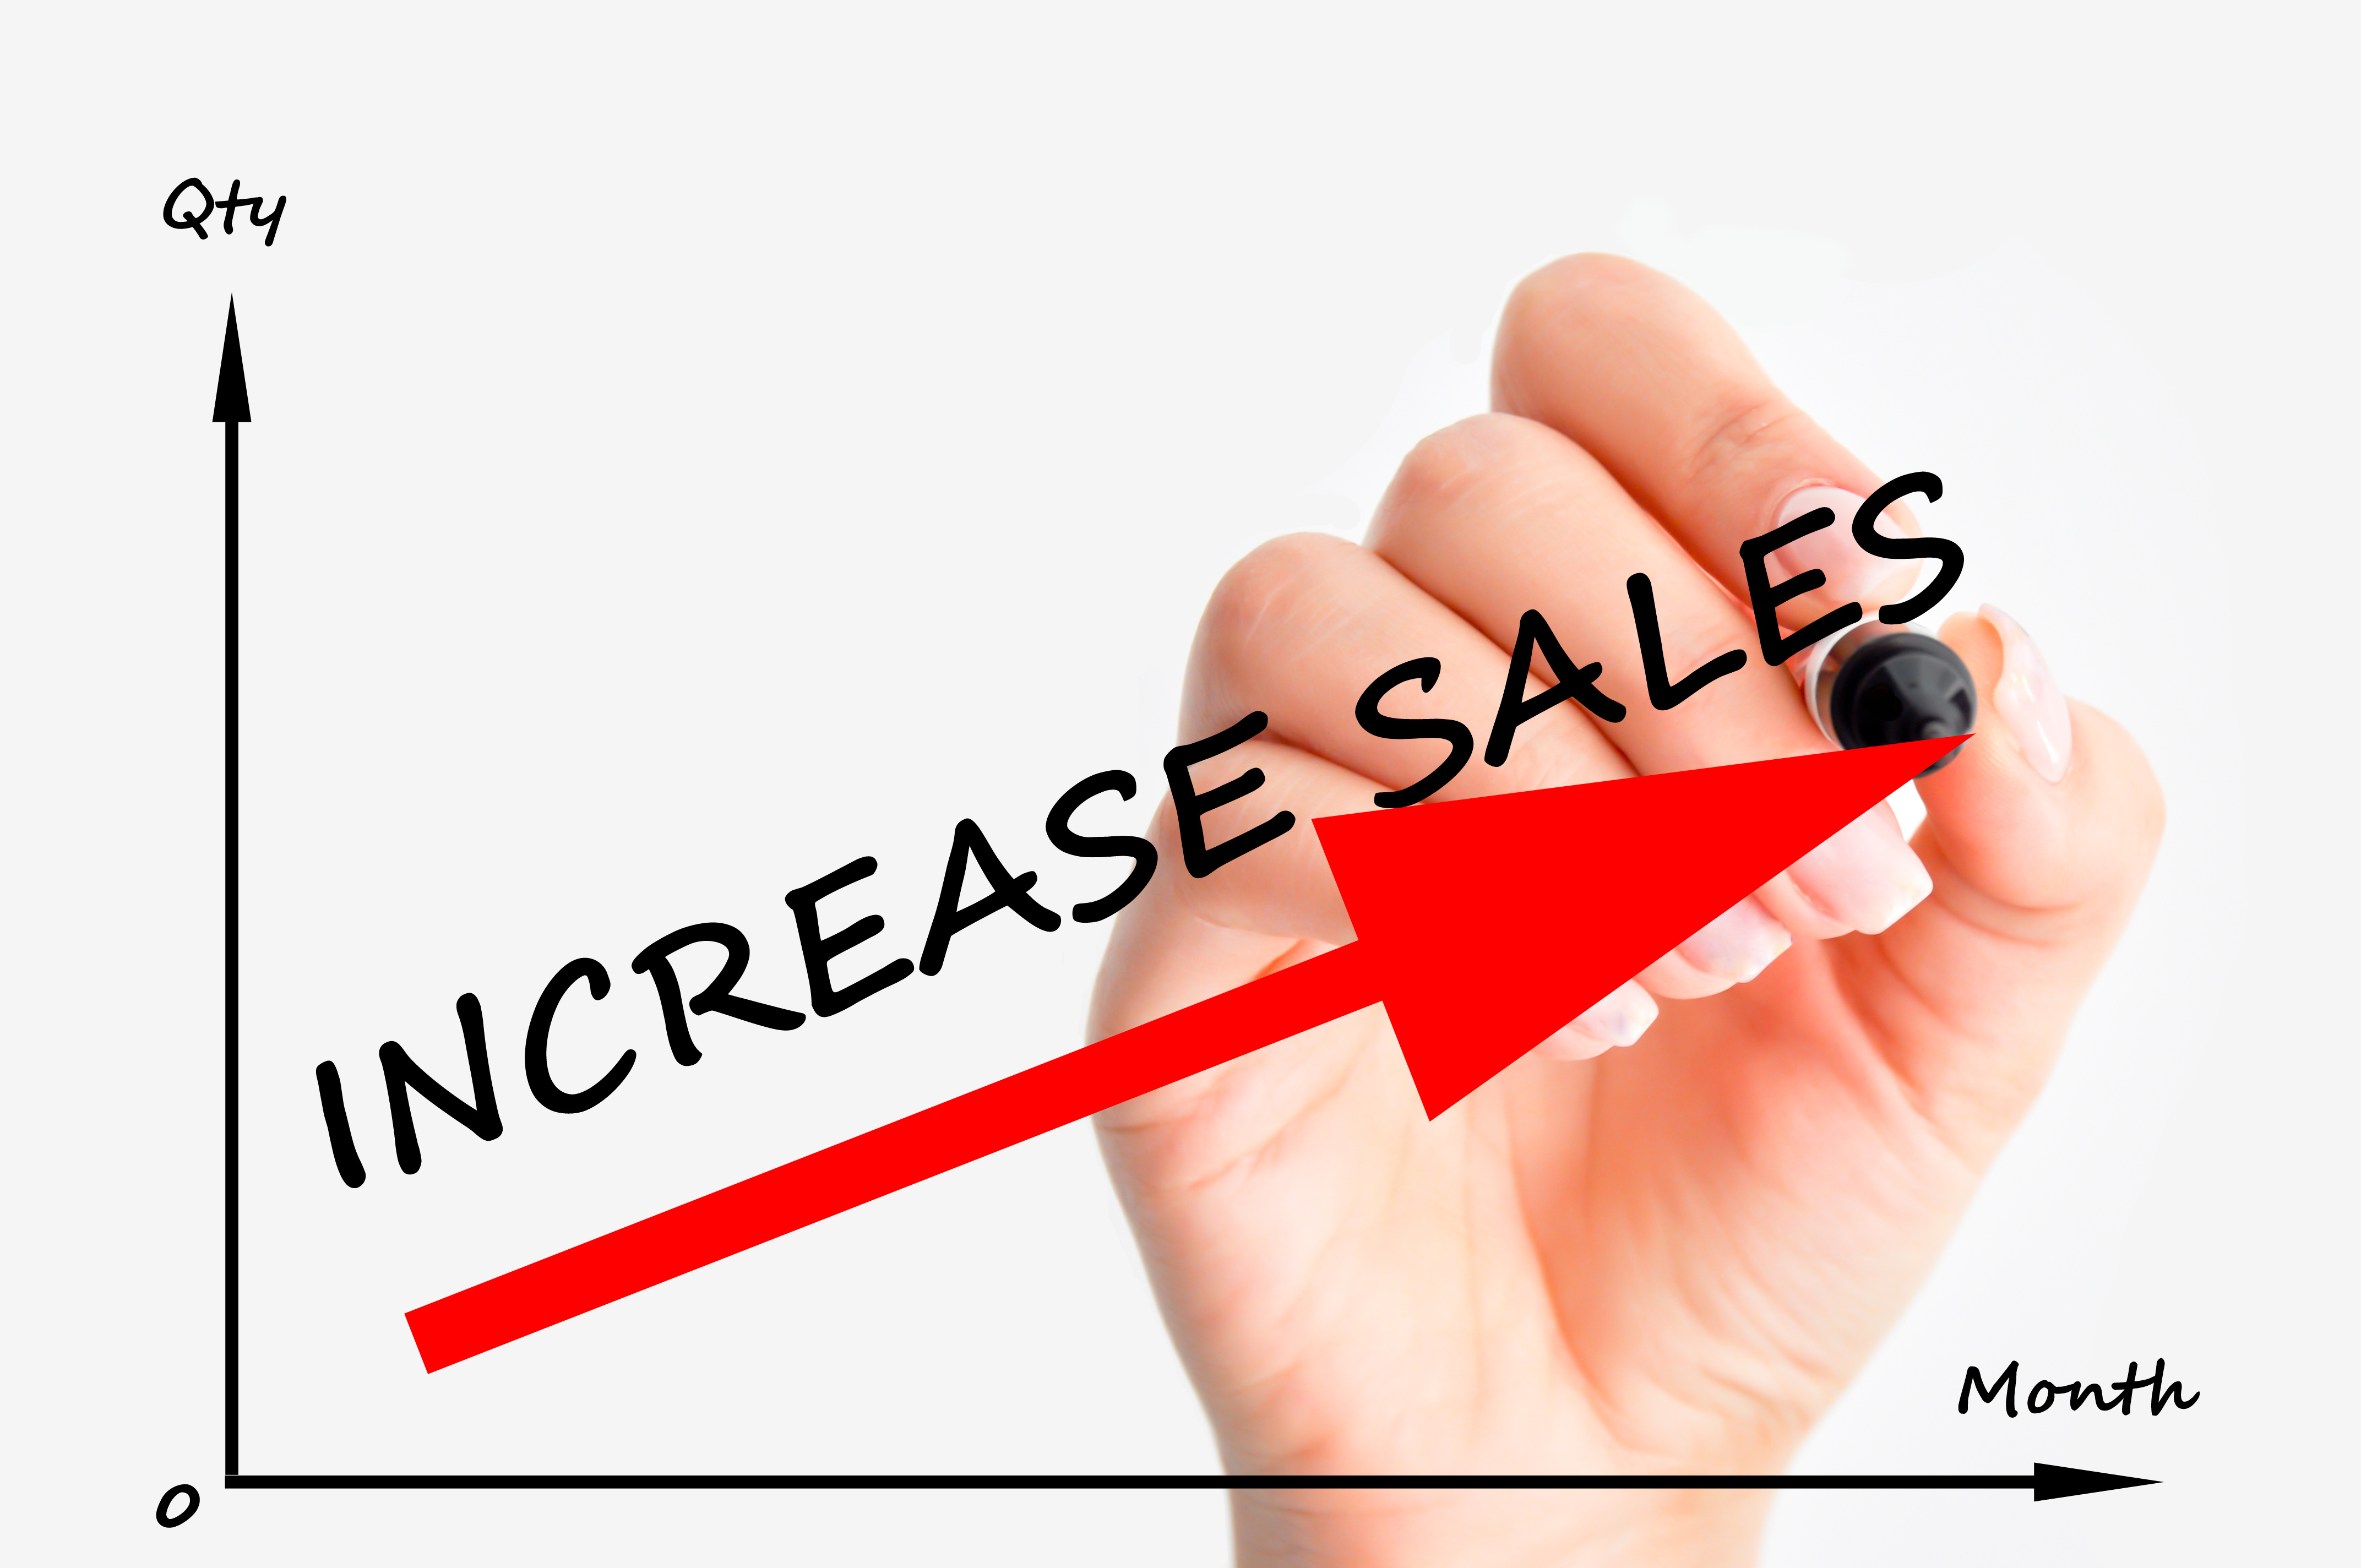 Incentive Marketing: Increase Sales